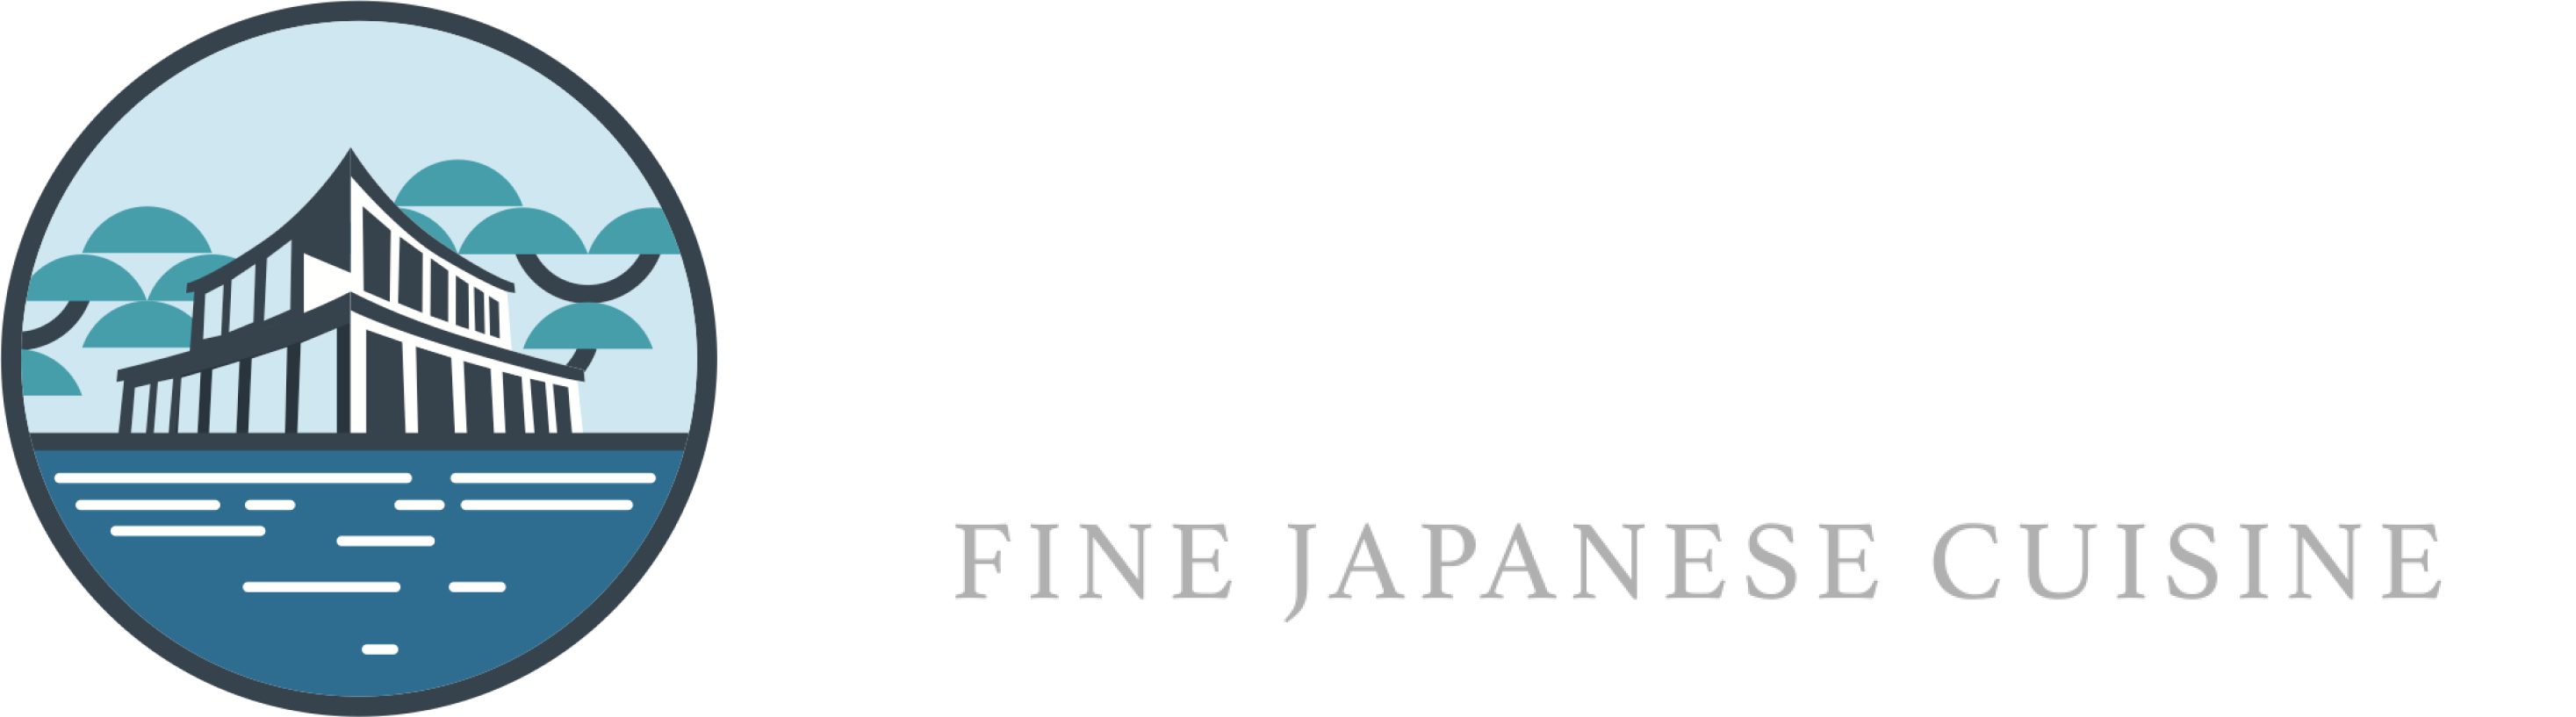 Japans Restaurant HYH Mizumi